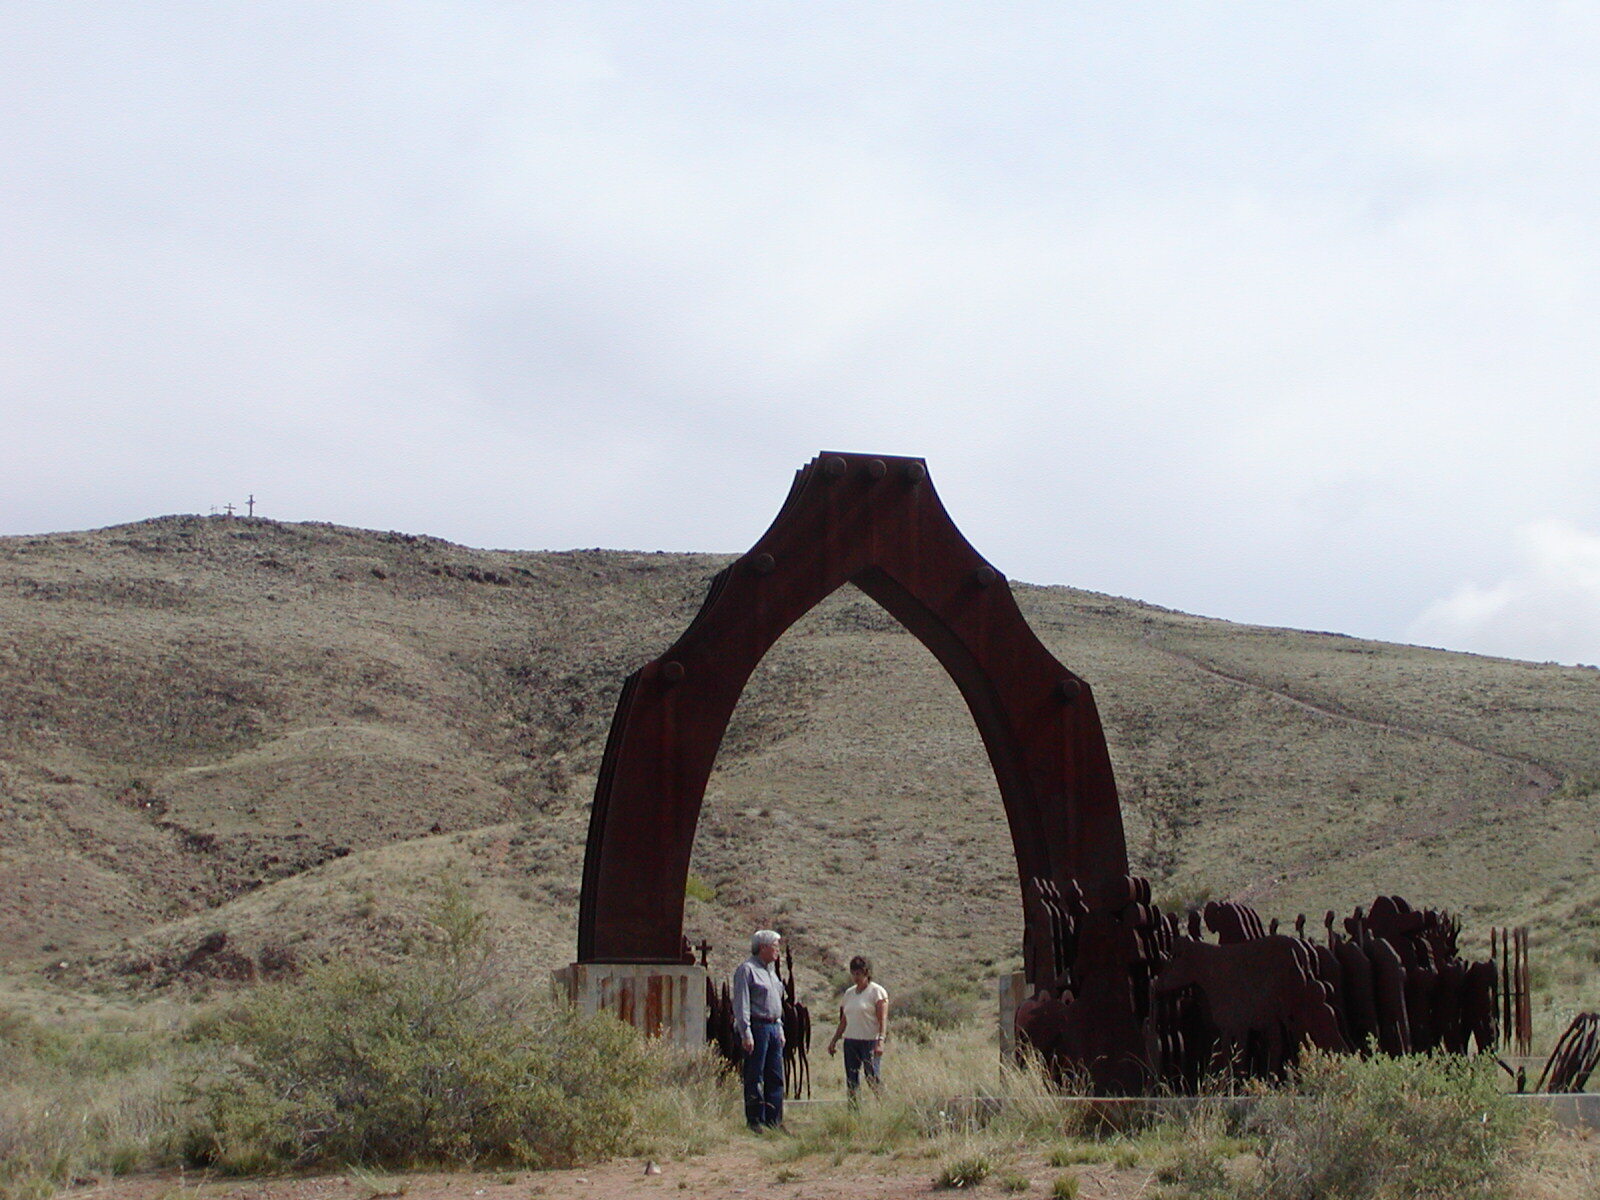 A group admires Puerta del Sol sculpture at El Cerro de Tome in Valencia County, NM